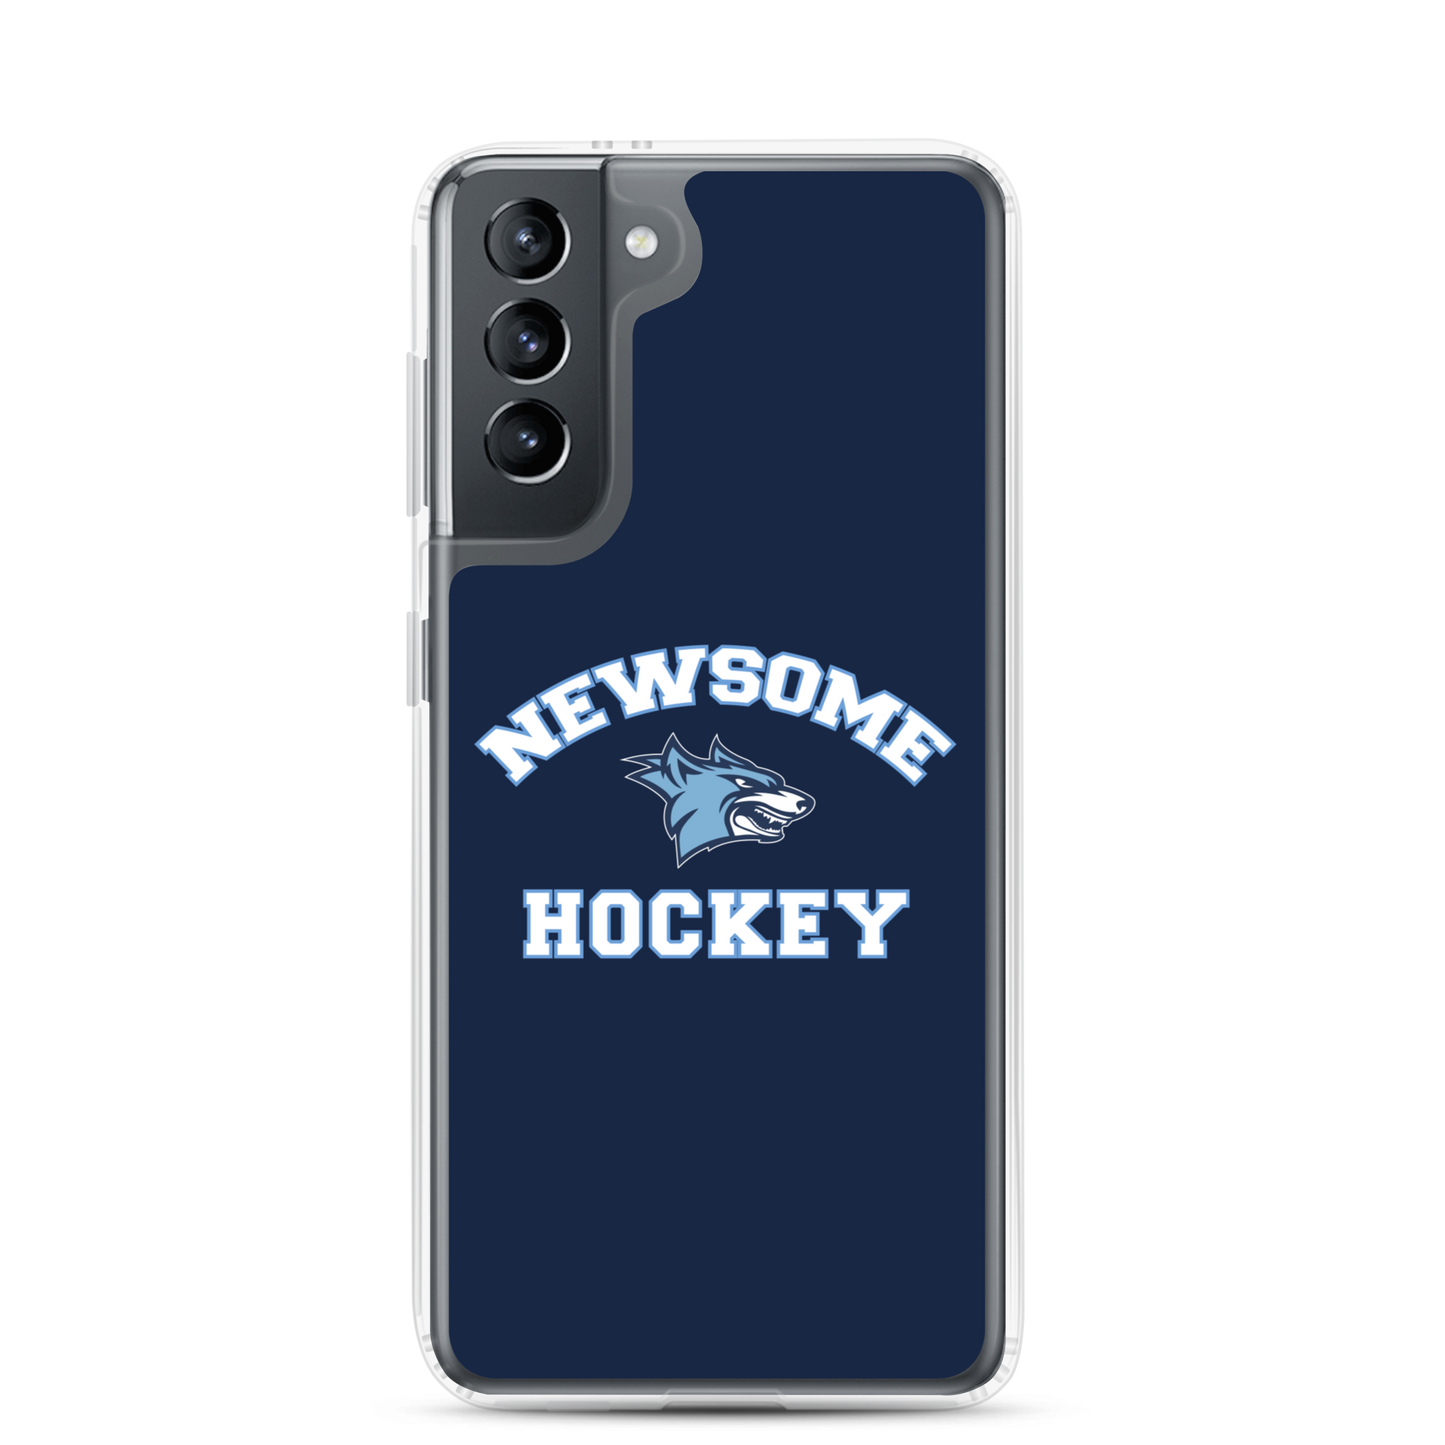 Newsome Hockey  Samsung Galaxy Phone Case